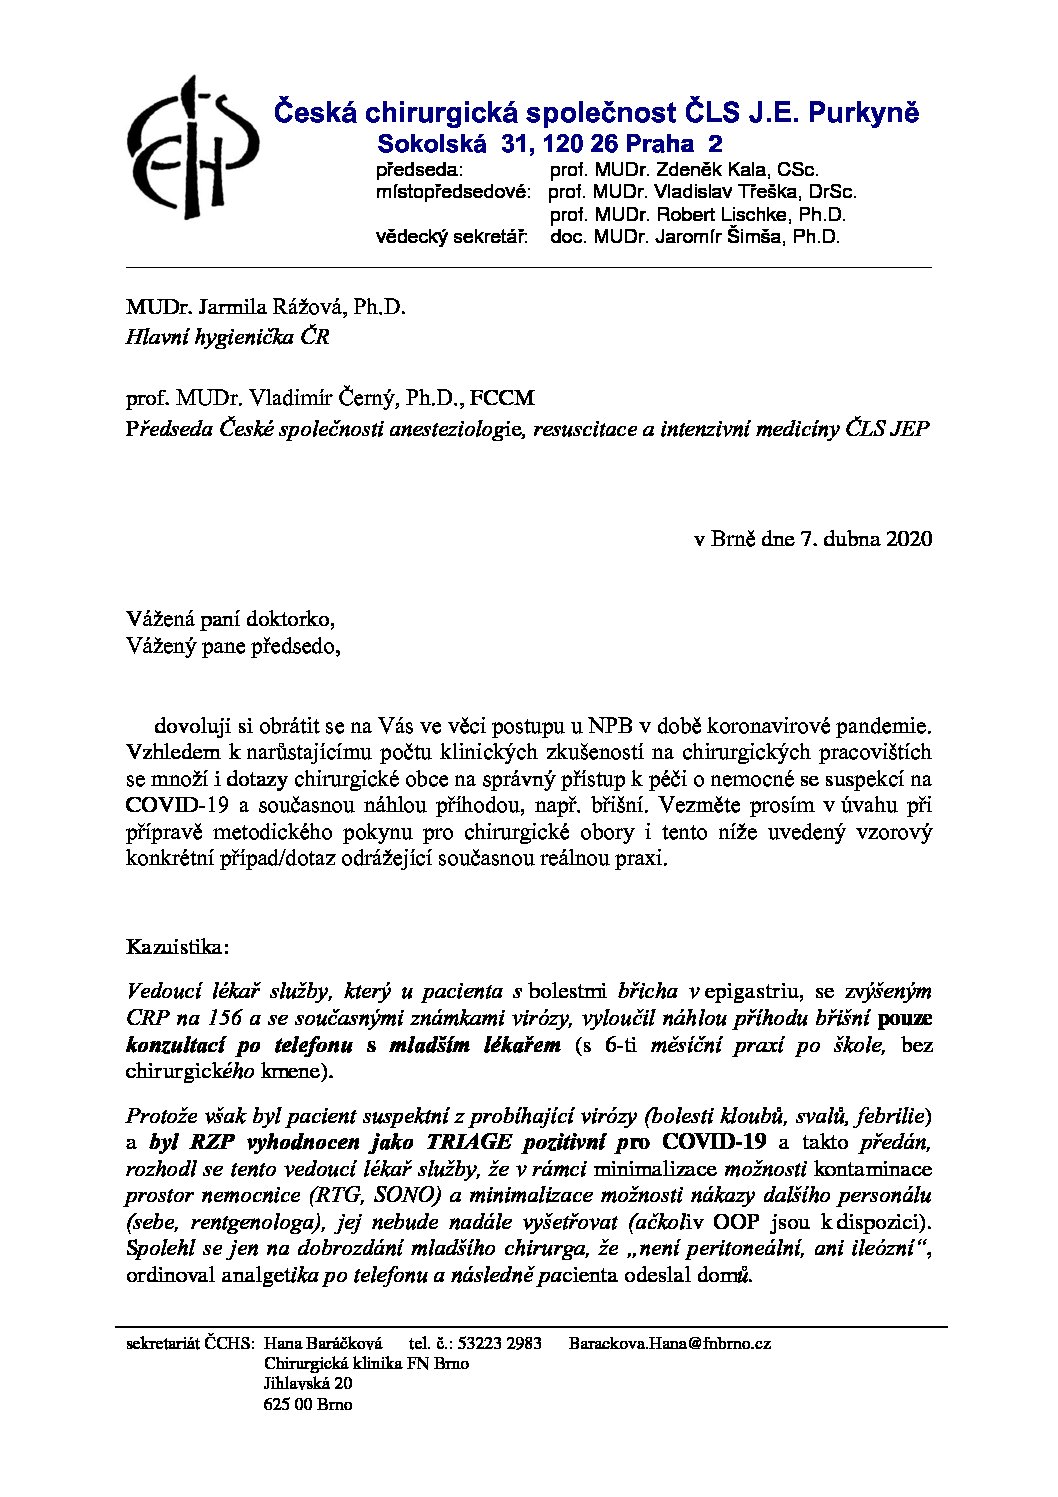 ČCHS ČLS JEP – Postup u NPB v době koronavirové pandemie (7. 4. 2020)